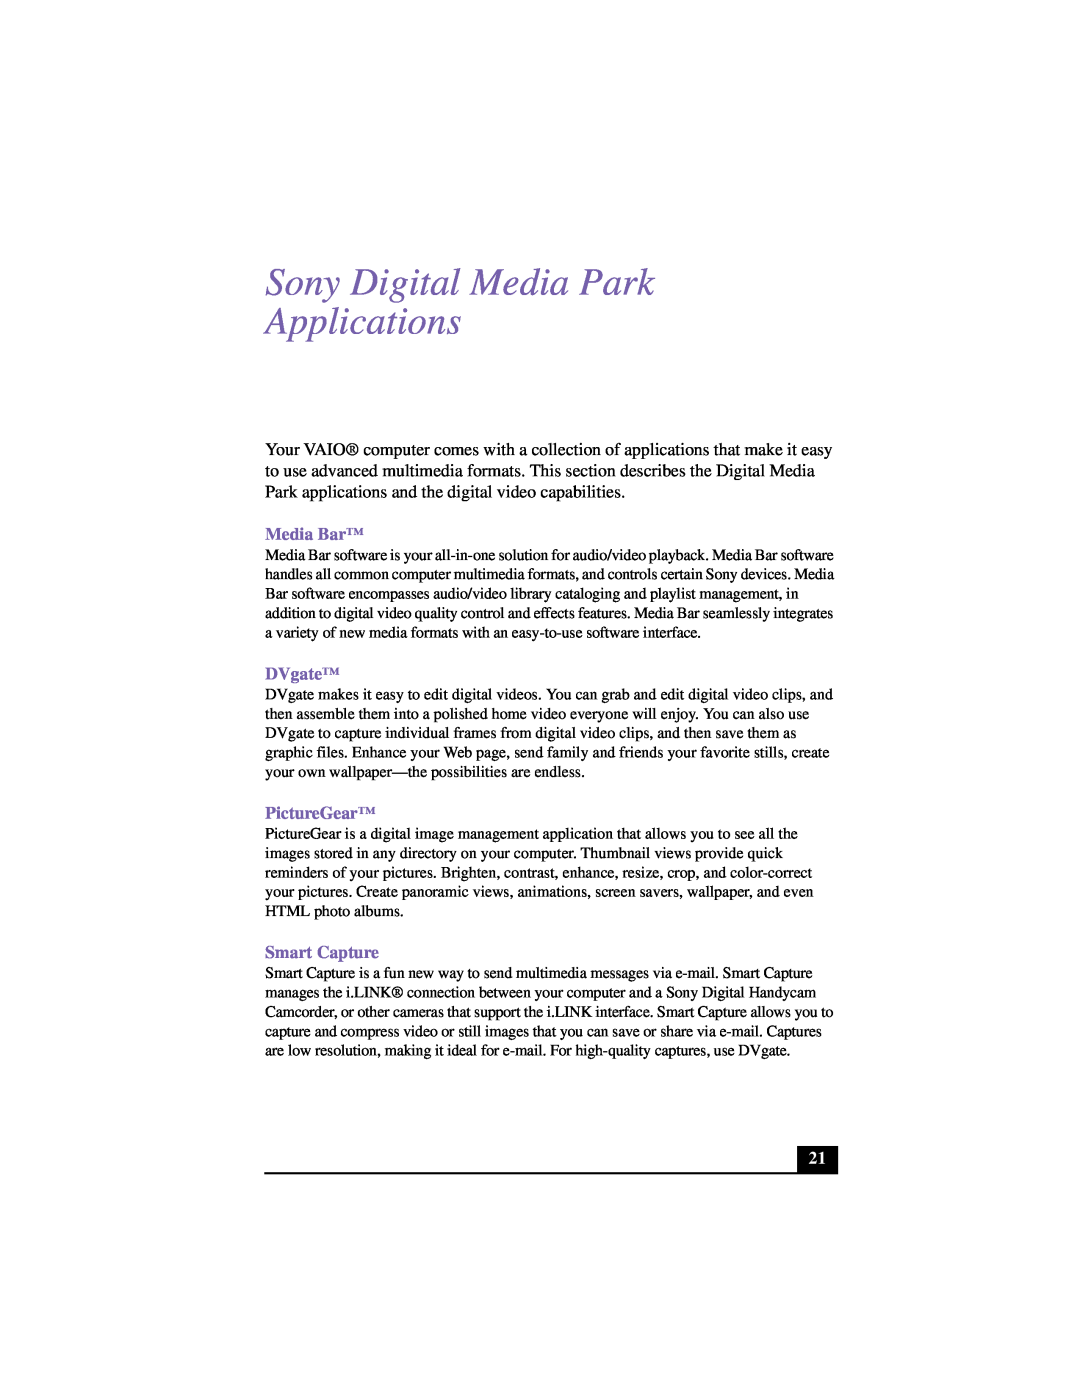 Sony VAIO manual Sony Digital Media Park Applications, Media Bar, DVgate, PictureGear, Smart Capture 